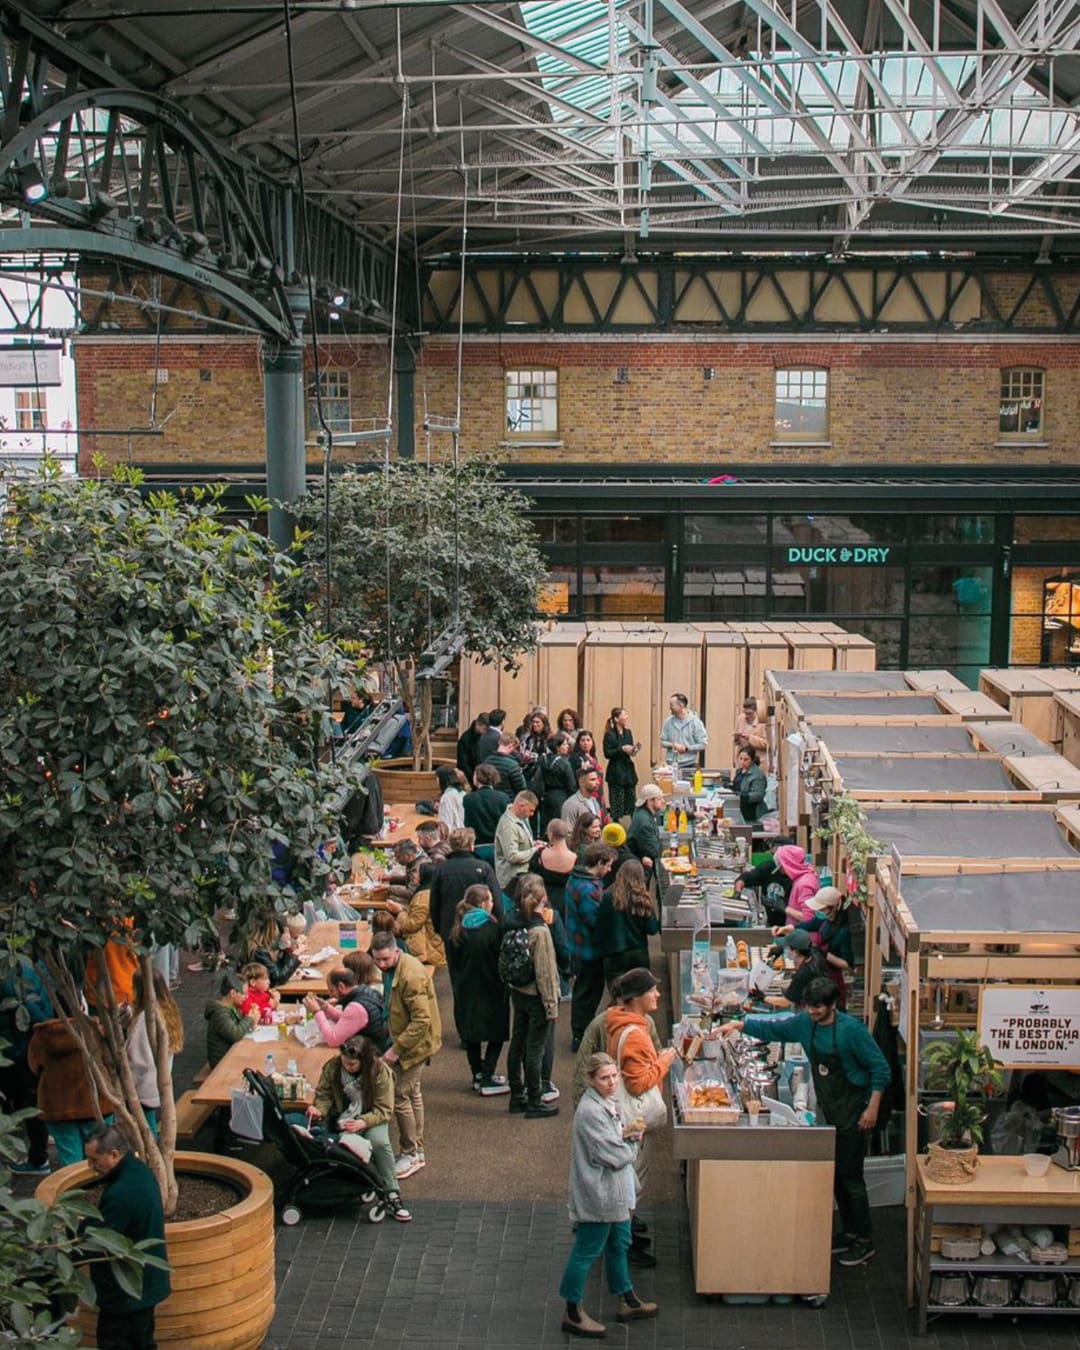 The best restaurants in Spitalfields | food stalls at Old Spitalfields Market beneath a lofty industrial ceiling